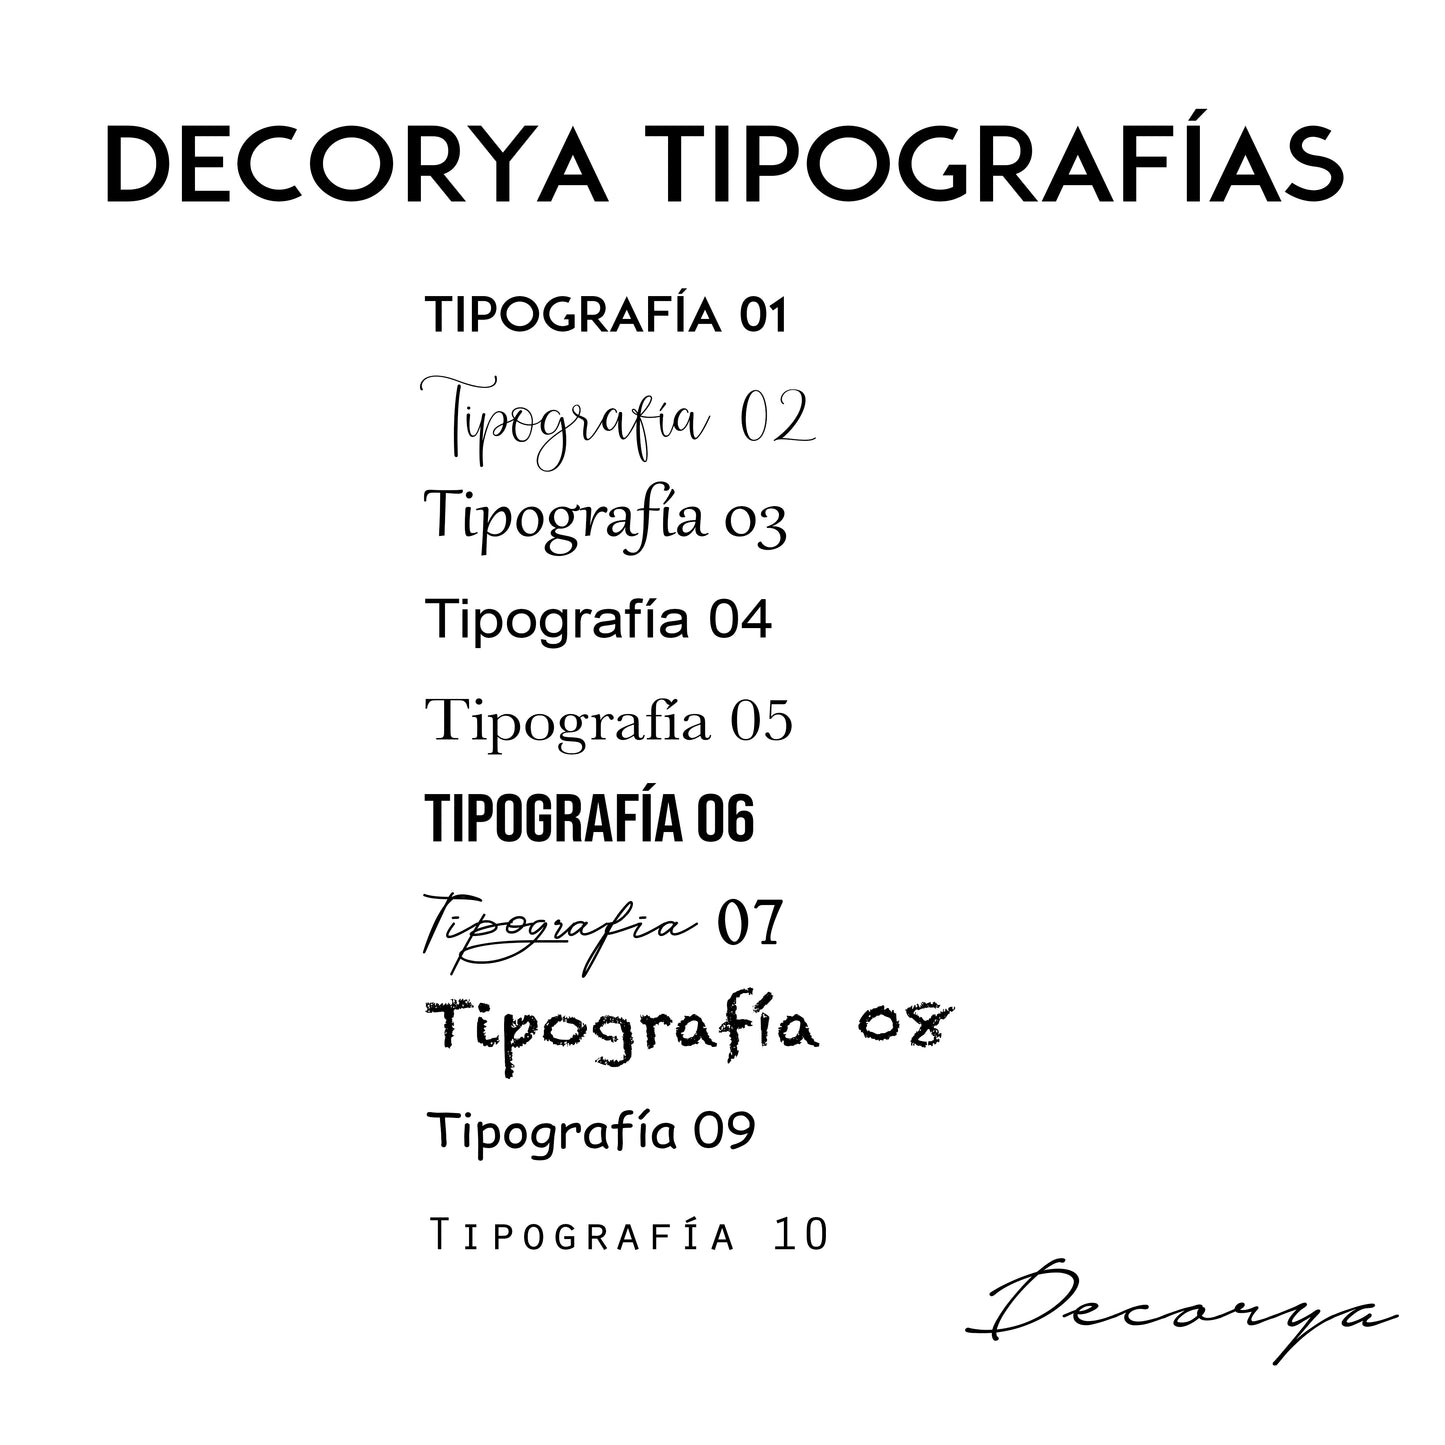 Decorya Personalized, canvas